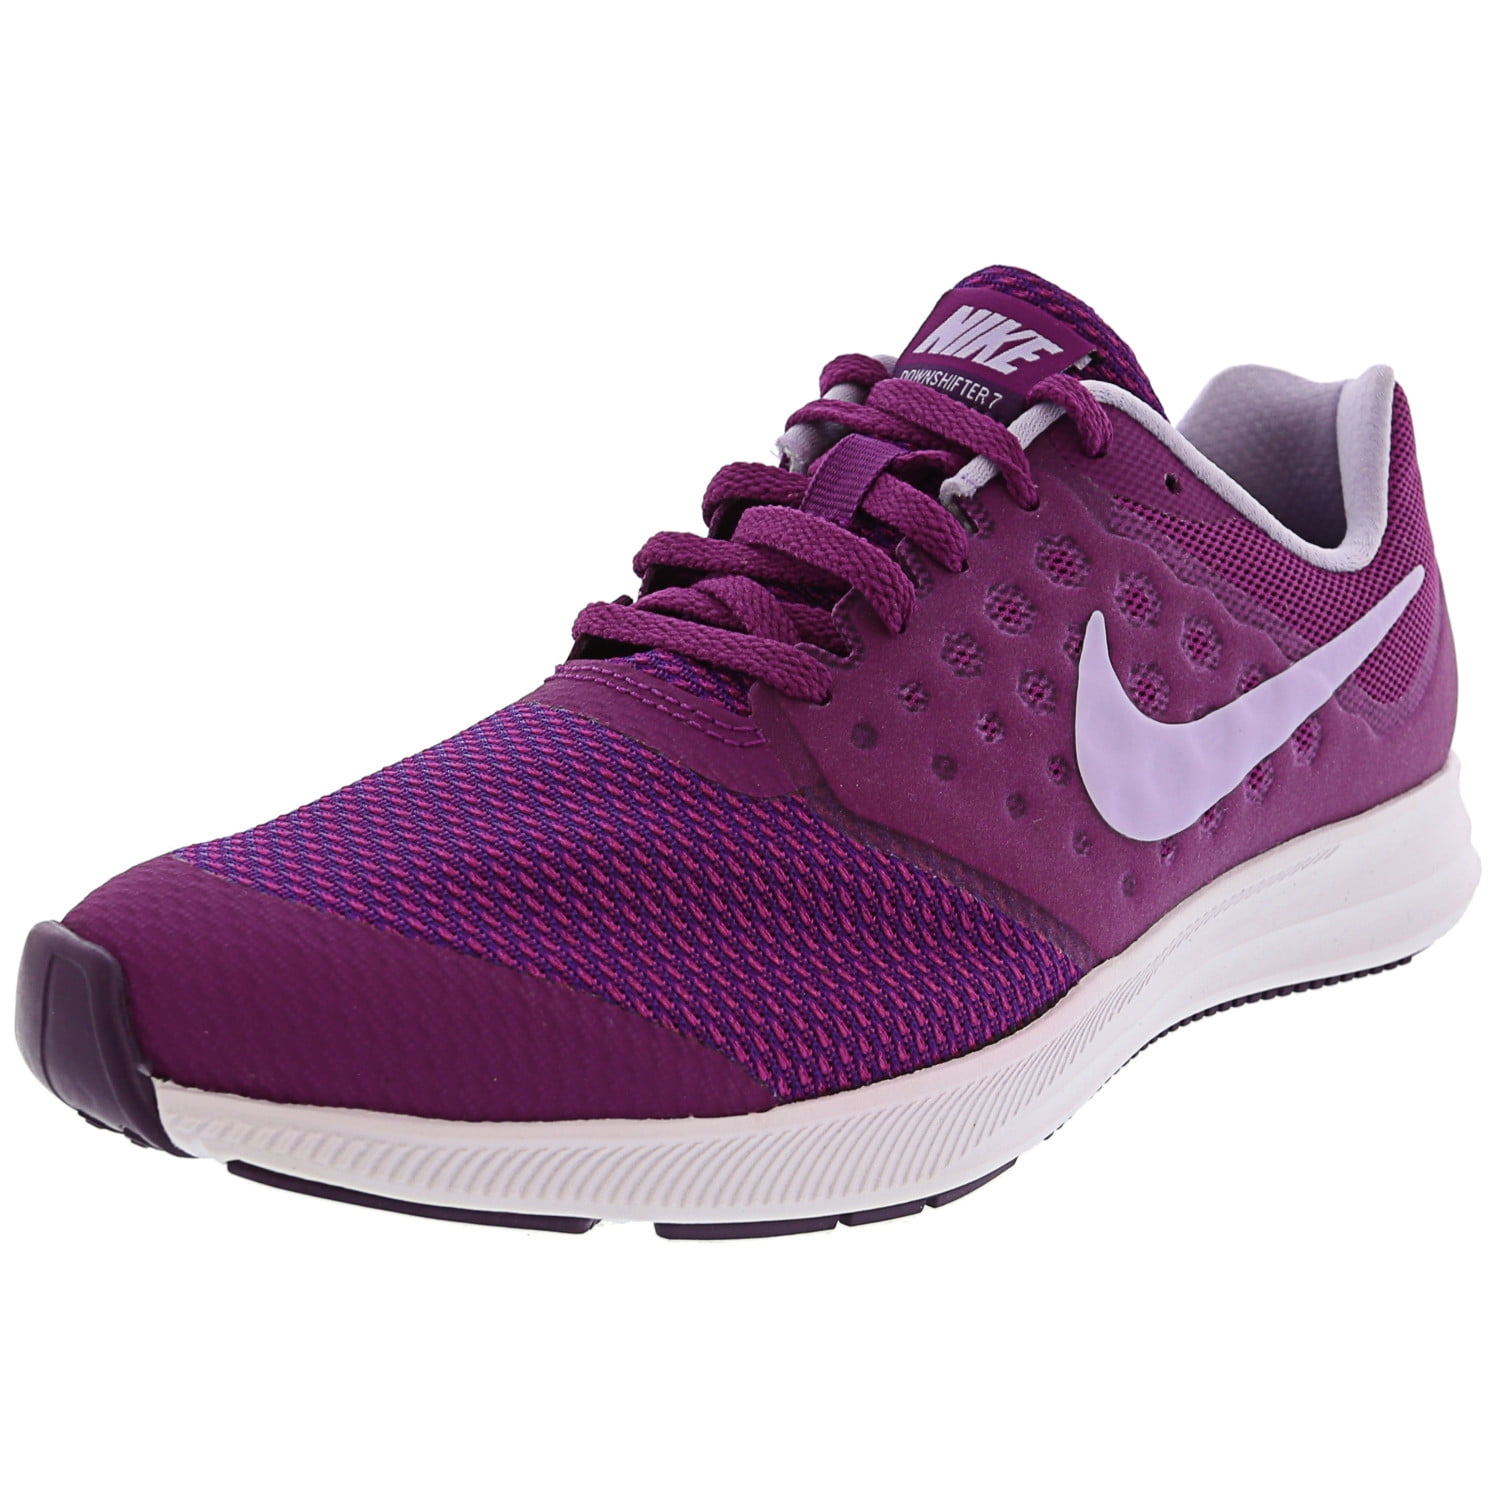 Nike Downshifter 7 Gs Night Purple / Violet Mist Ankle-High Mesh Running Shoe 7M - Walmart.com